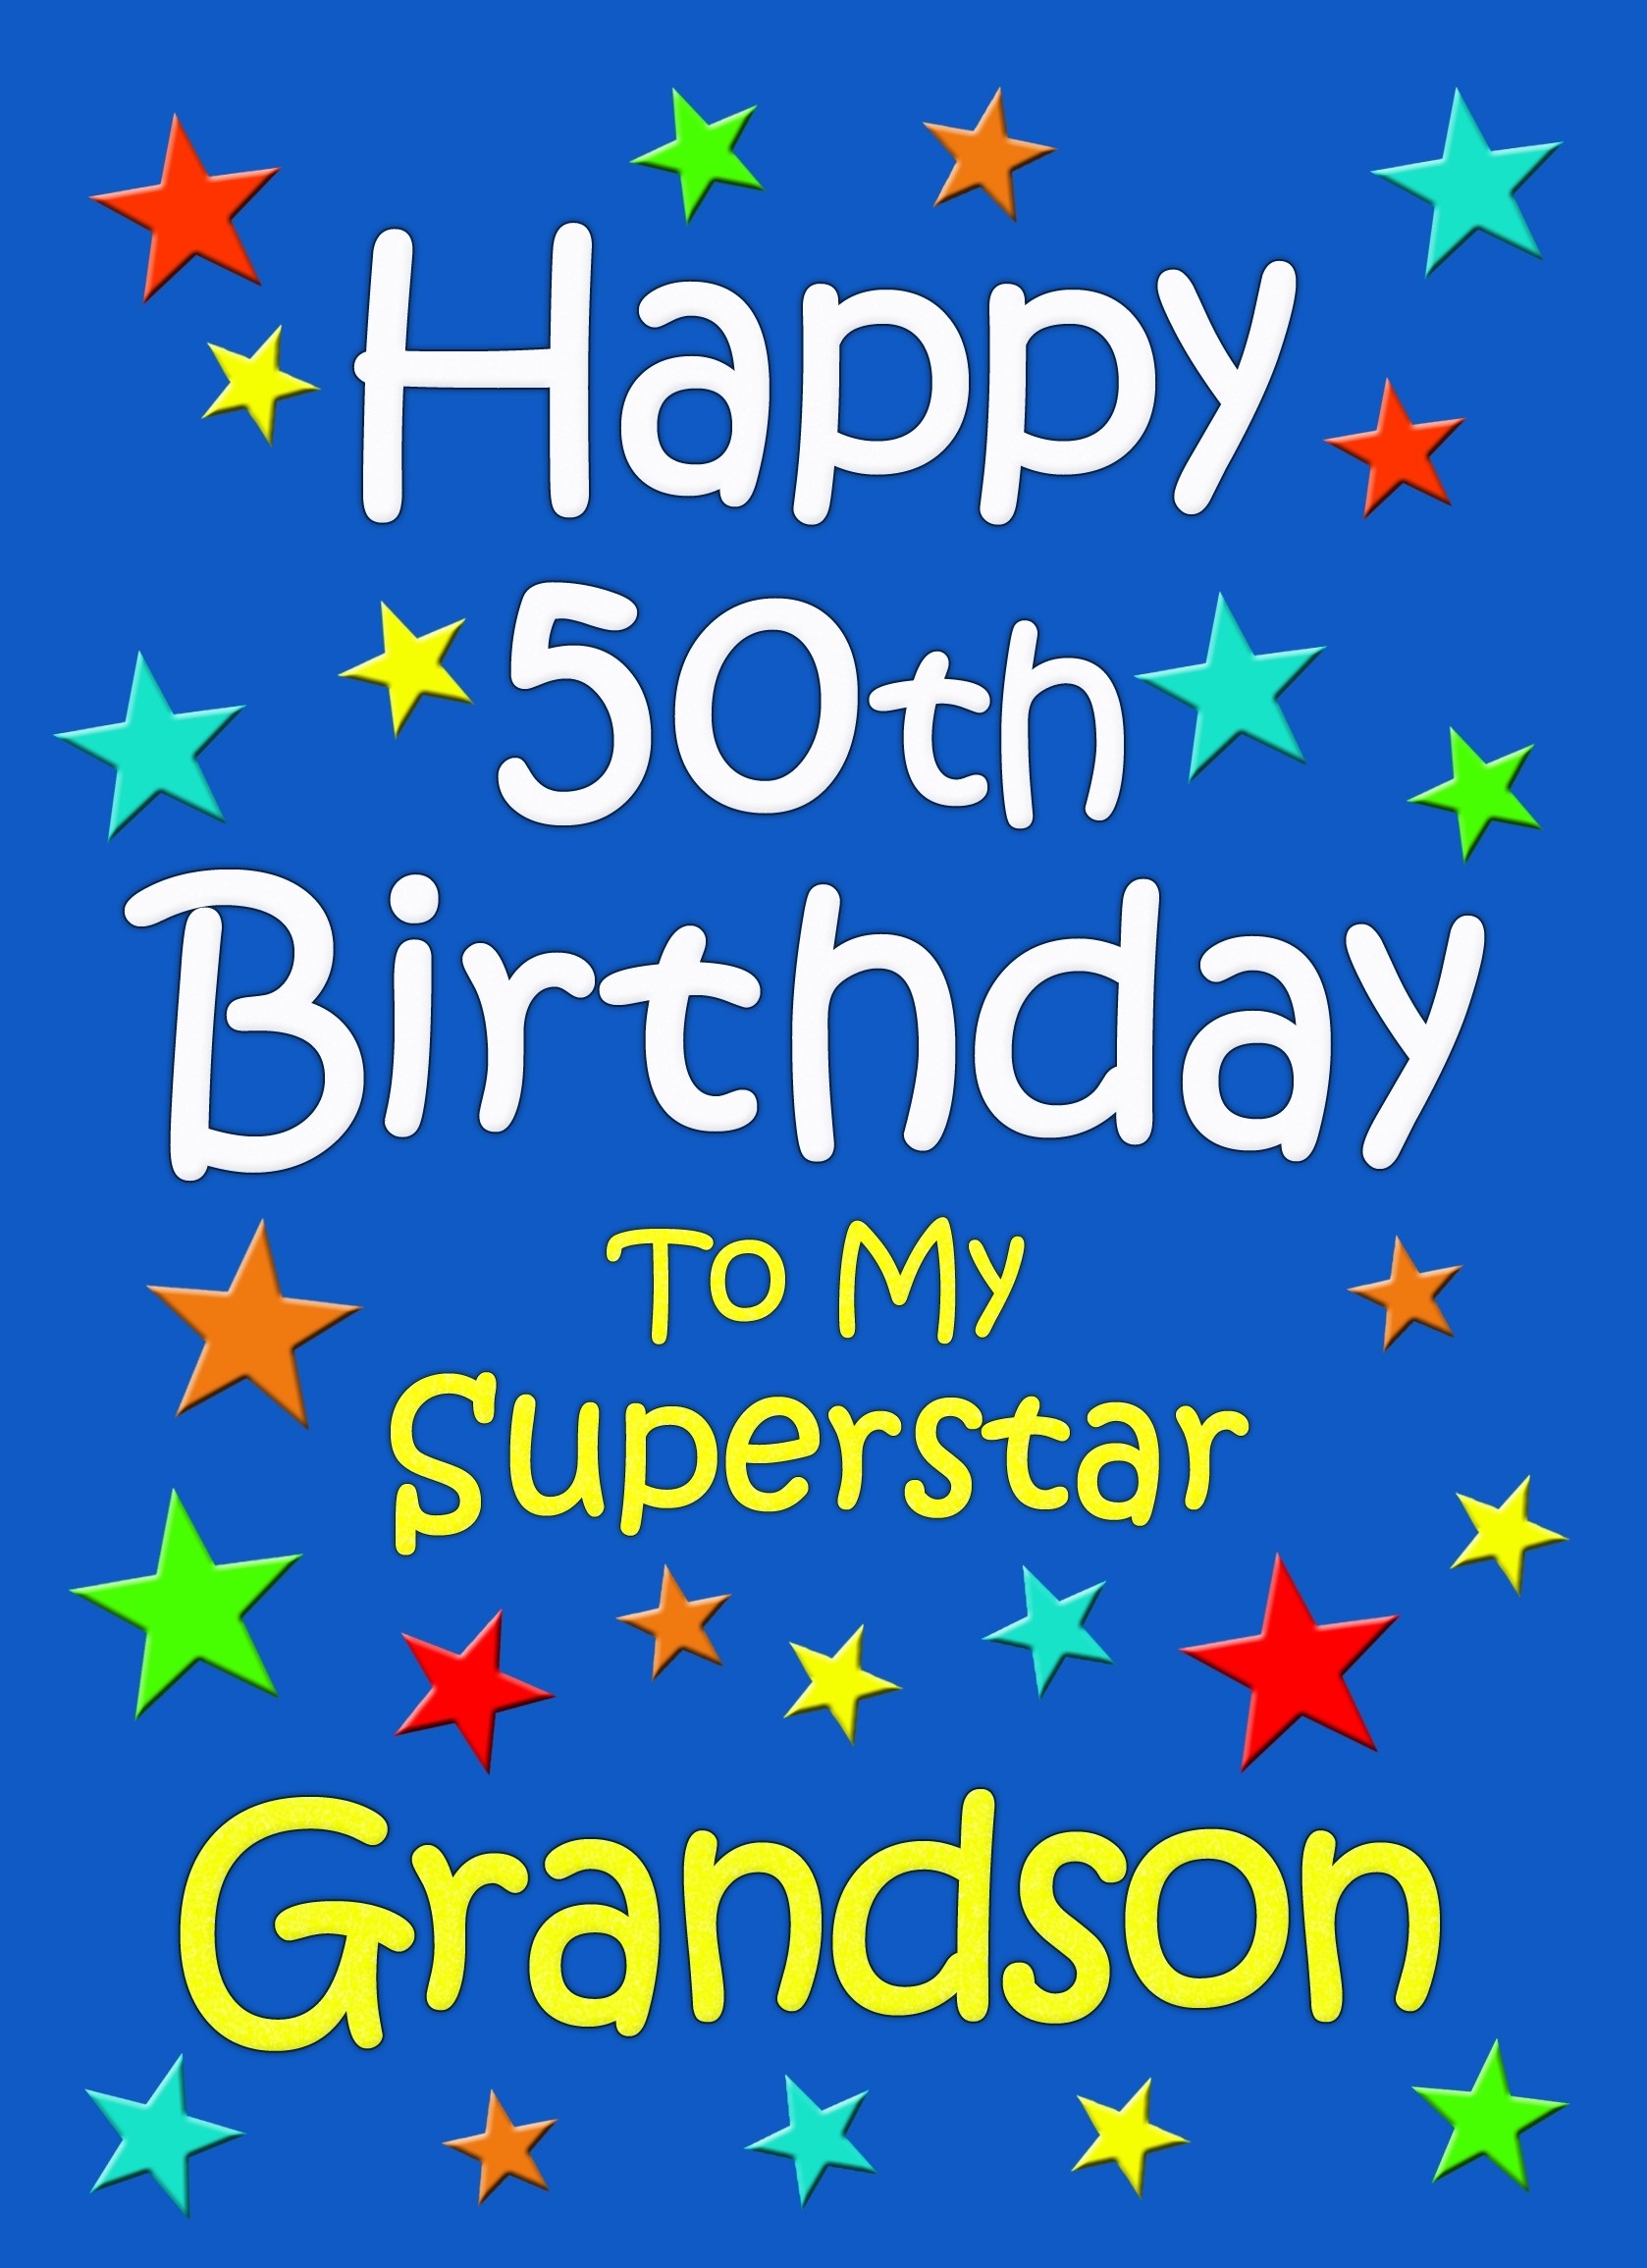 Grandson 50th Birthday Card (Blue)